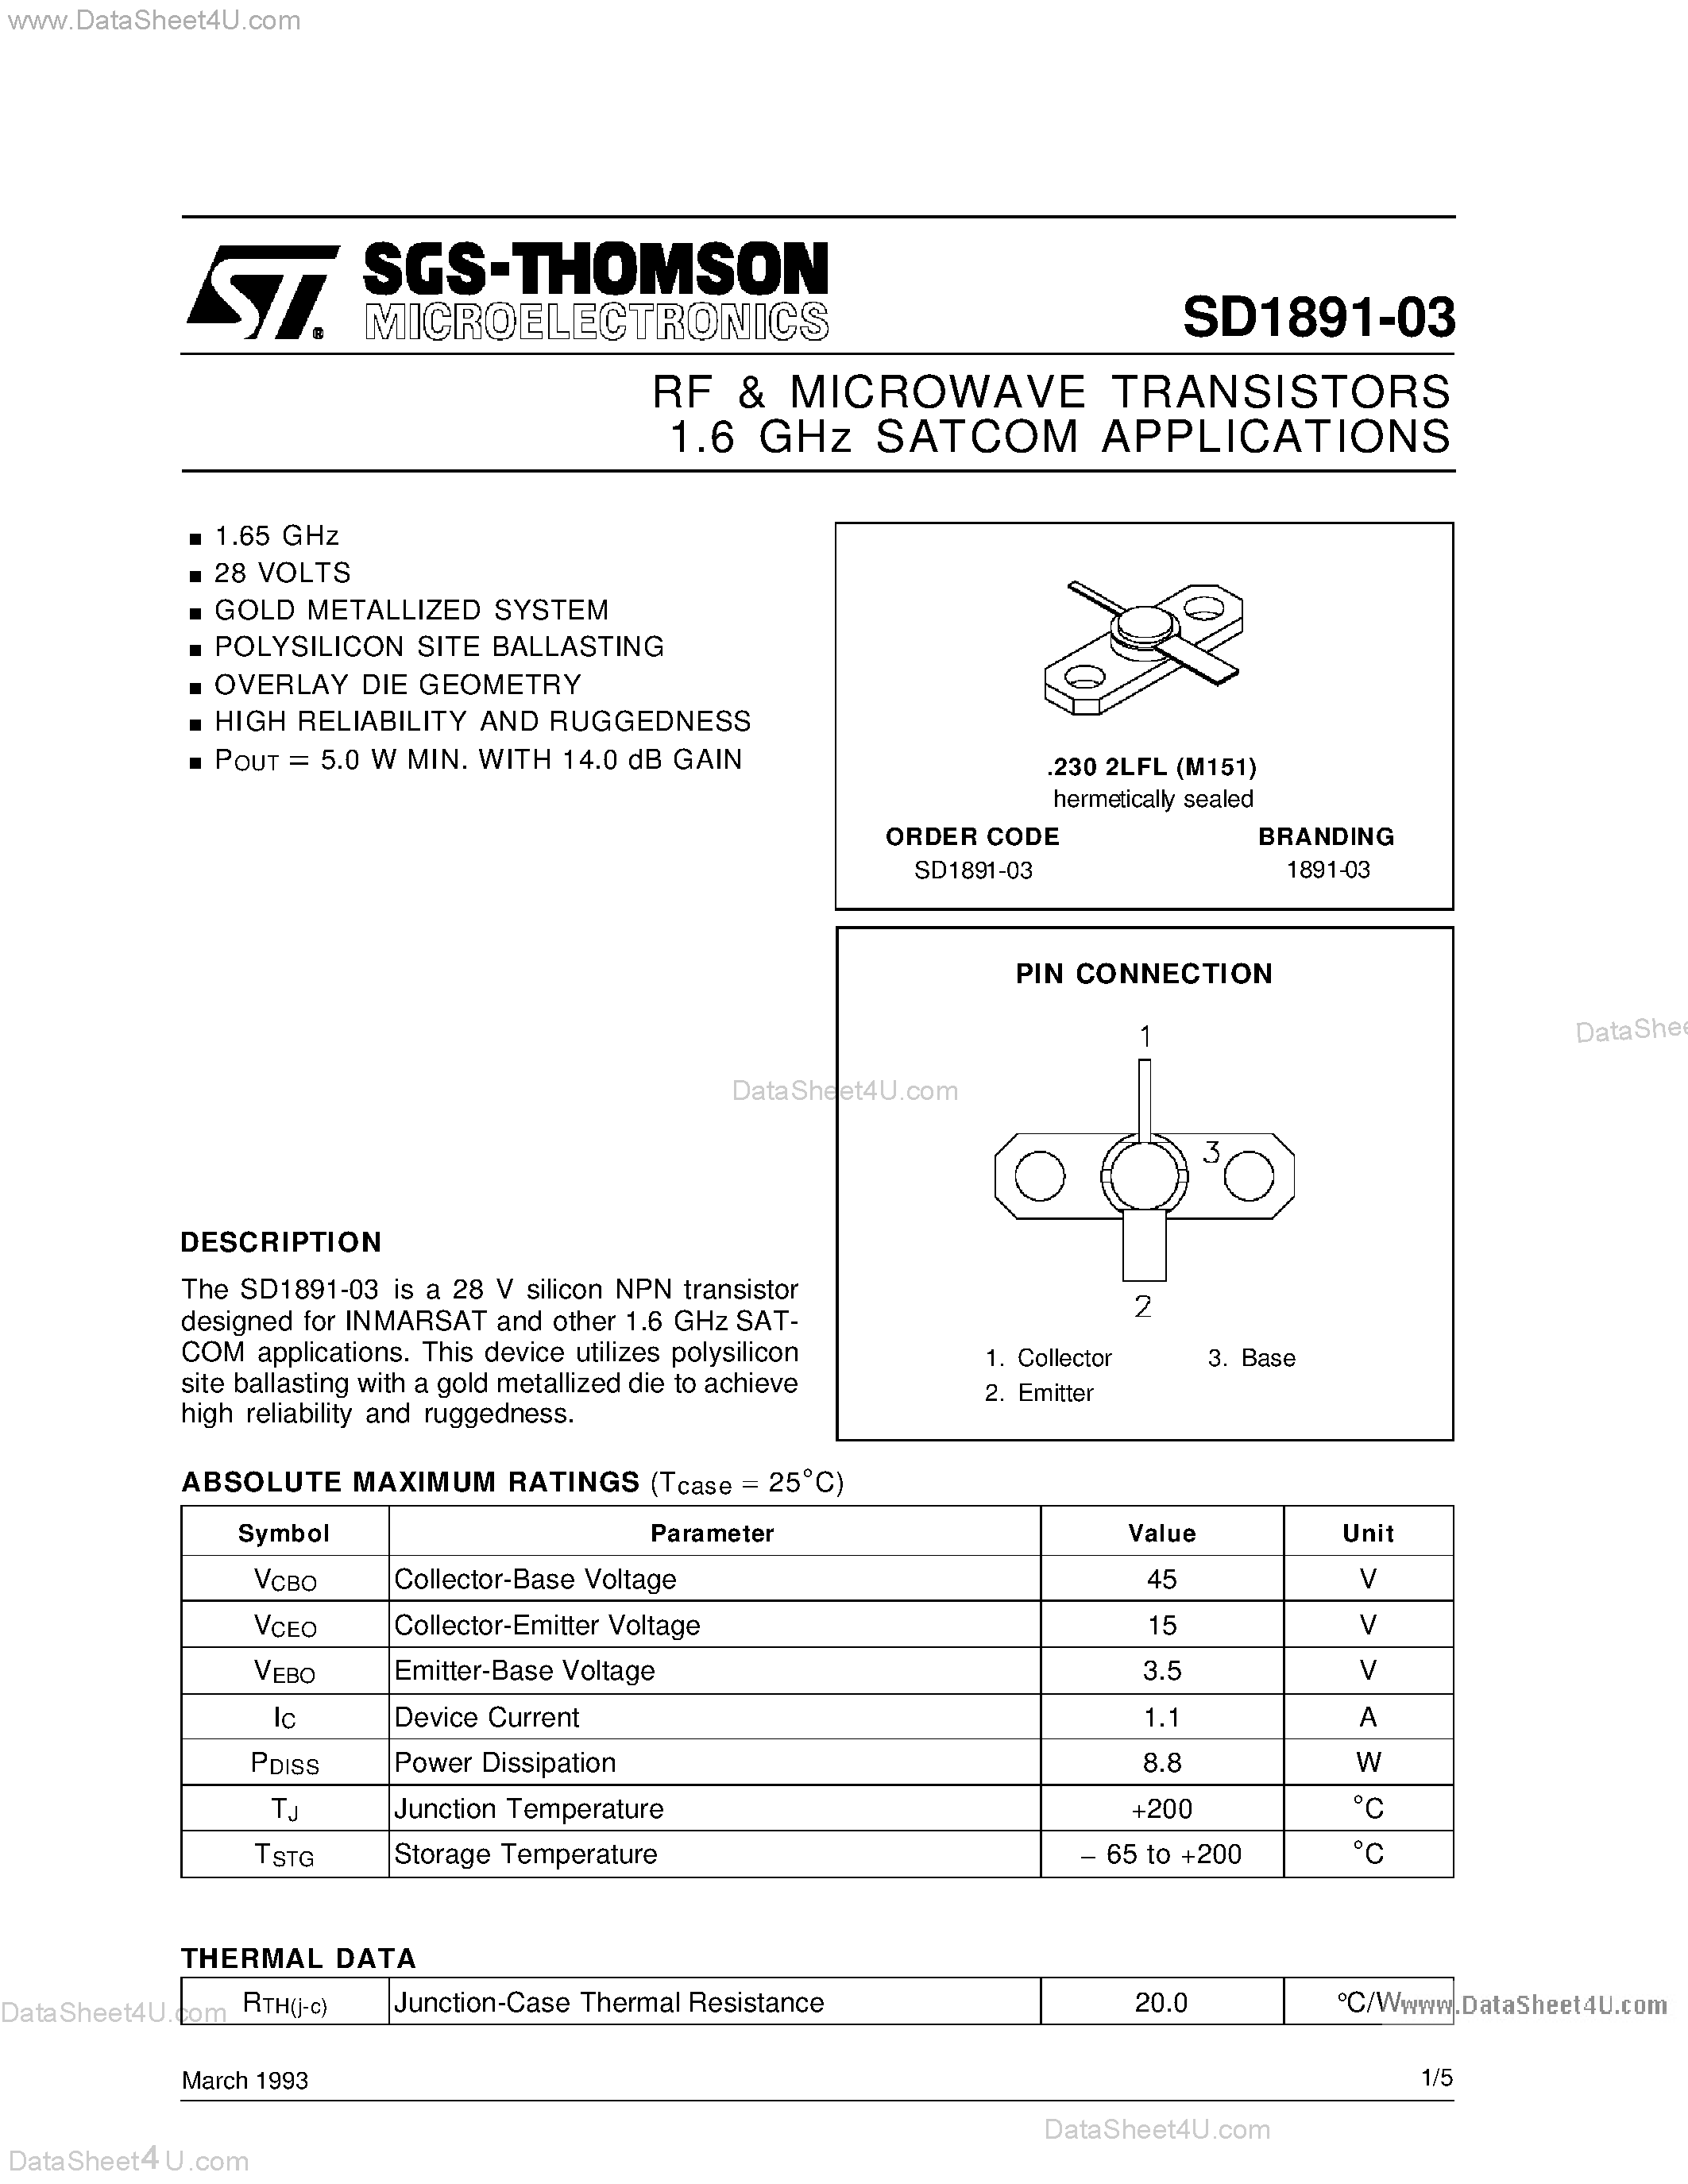 Datasheet SD1891-03 - RF & MICROWAVE TRANSISTORS 1.6 GHz SATCOM APPLICATIONS page 1